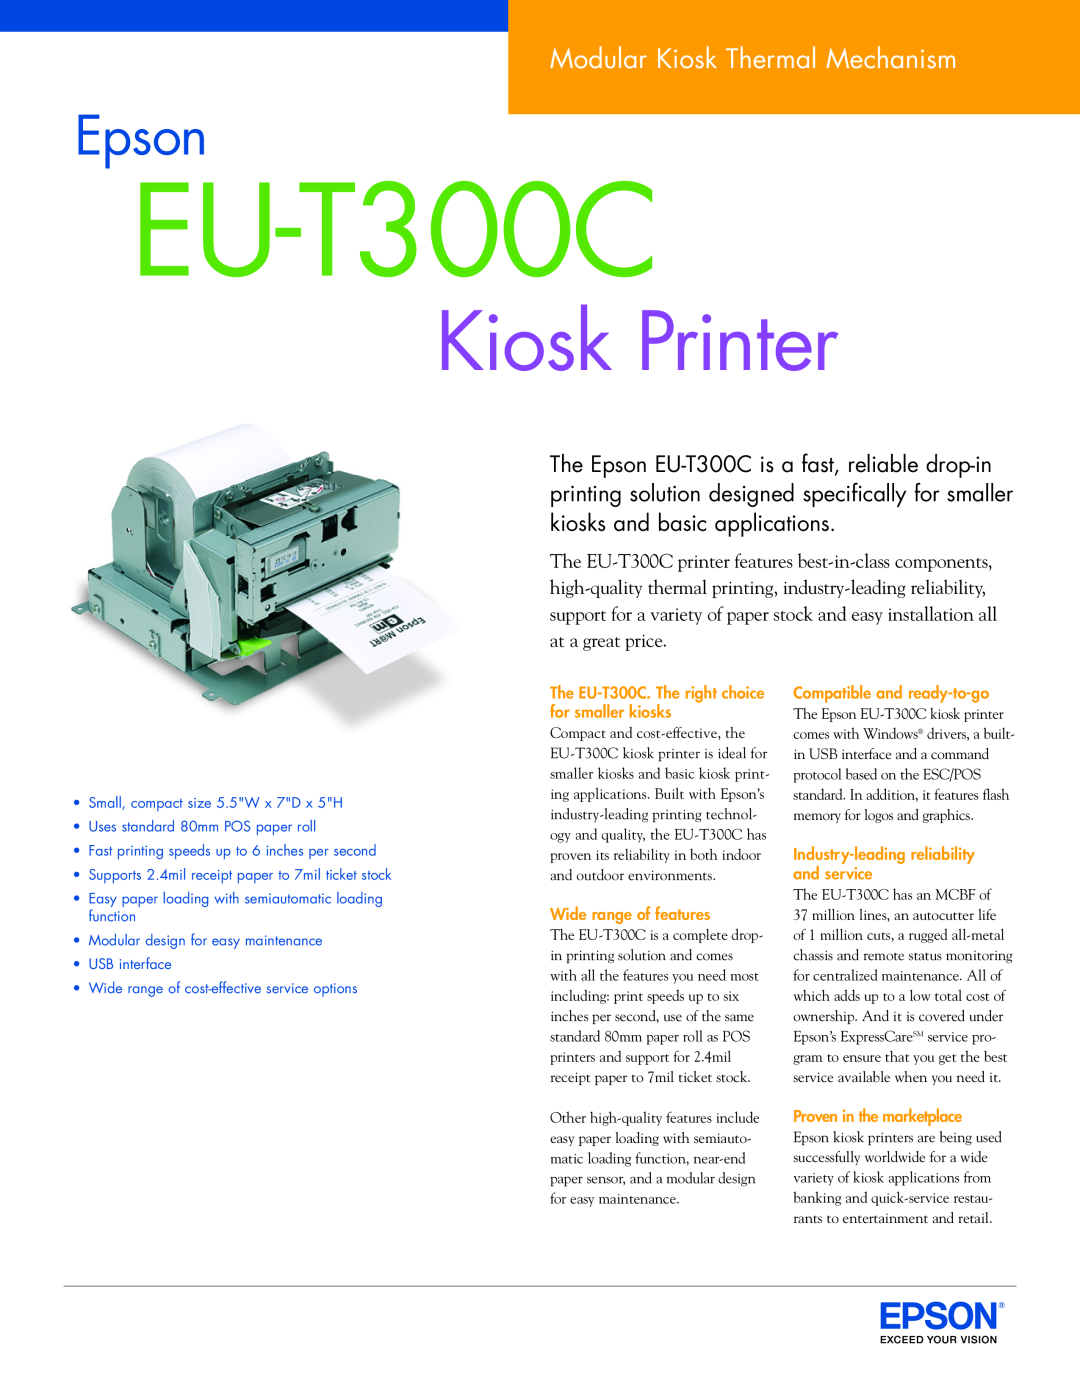 Epson EU-T300C manual Kiosk Printer, Epson, Modular Kiosk Thermal Mechanism, Wide range of features 